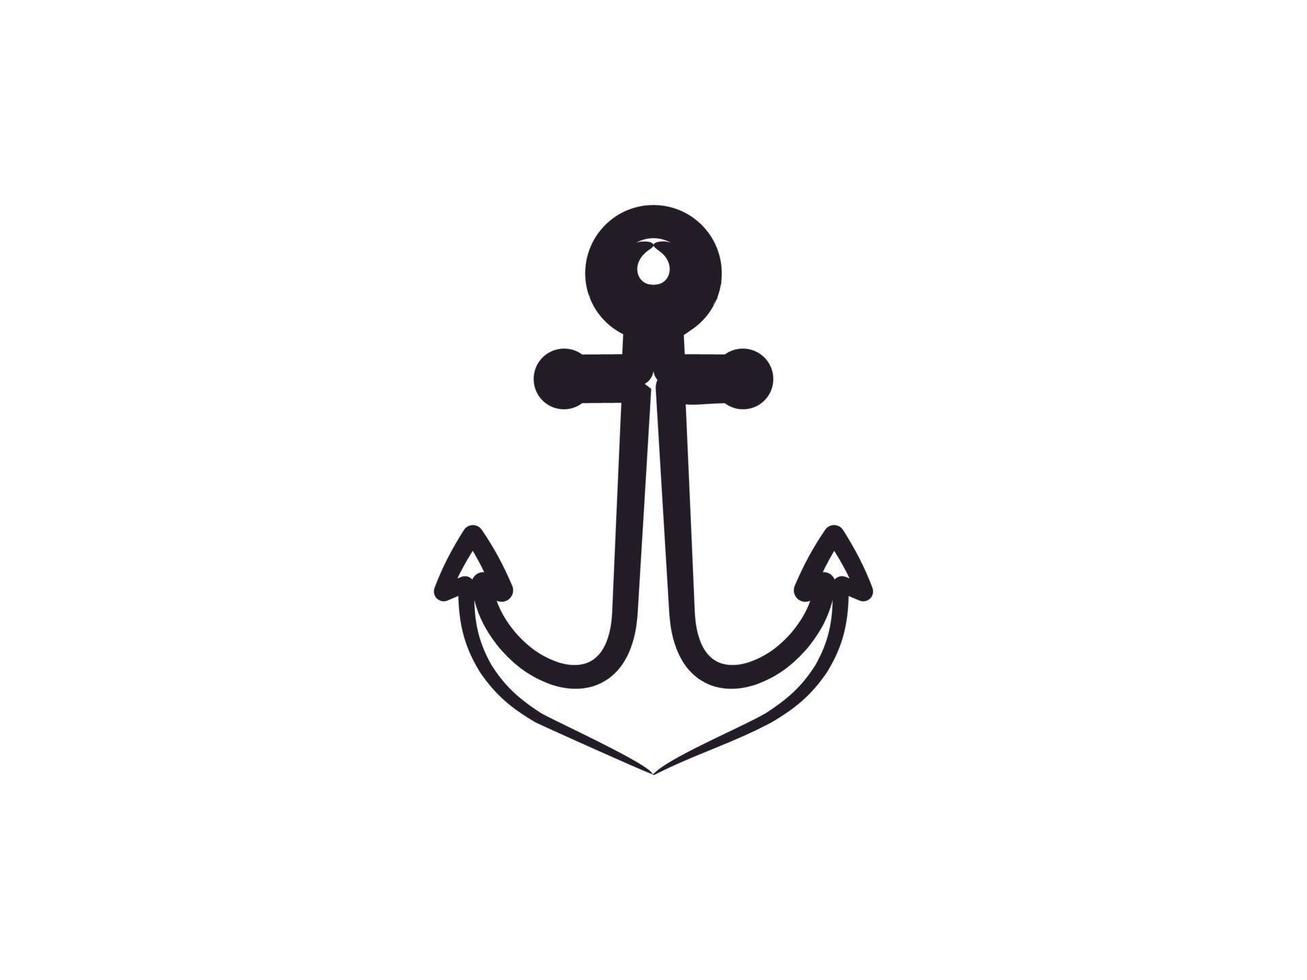 ancla rústica dibujada a mano vintage retro hipster diseño de logotipo simple para barco marina náutica transporte de barcos vector